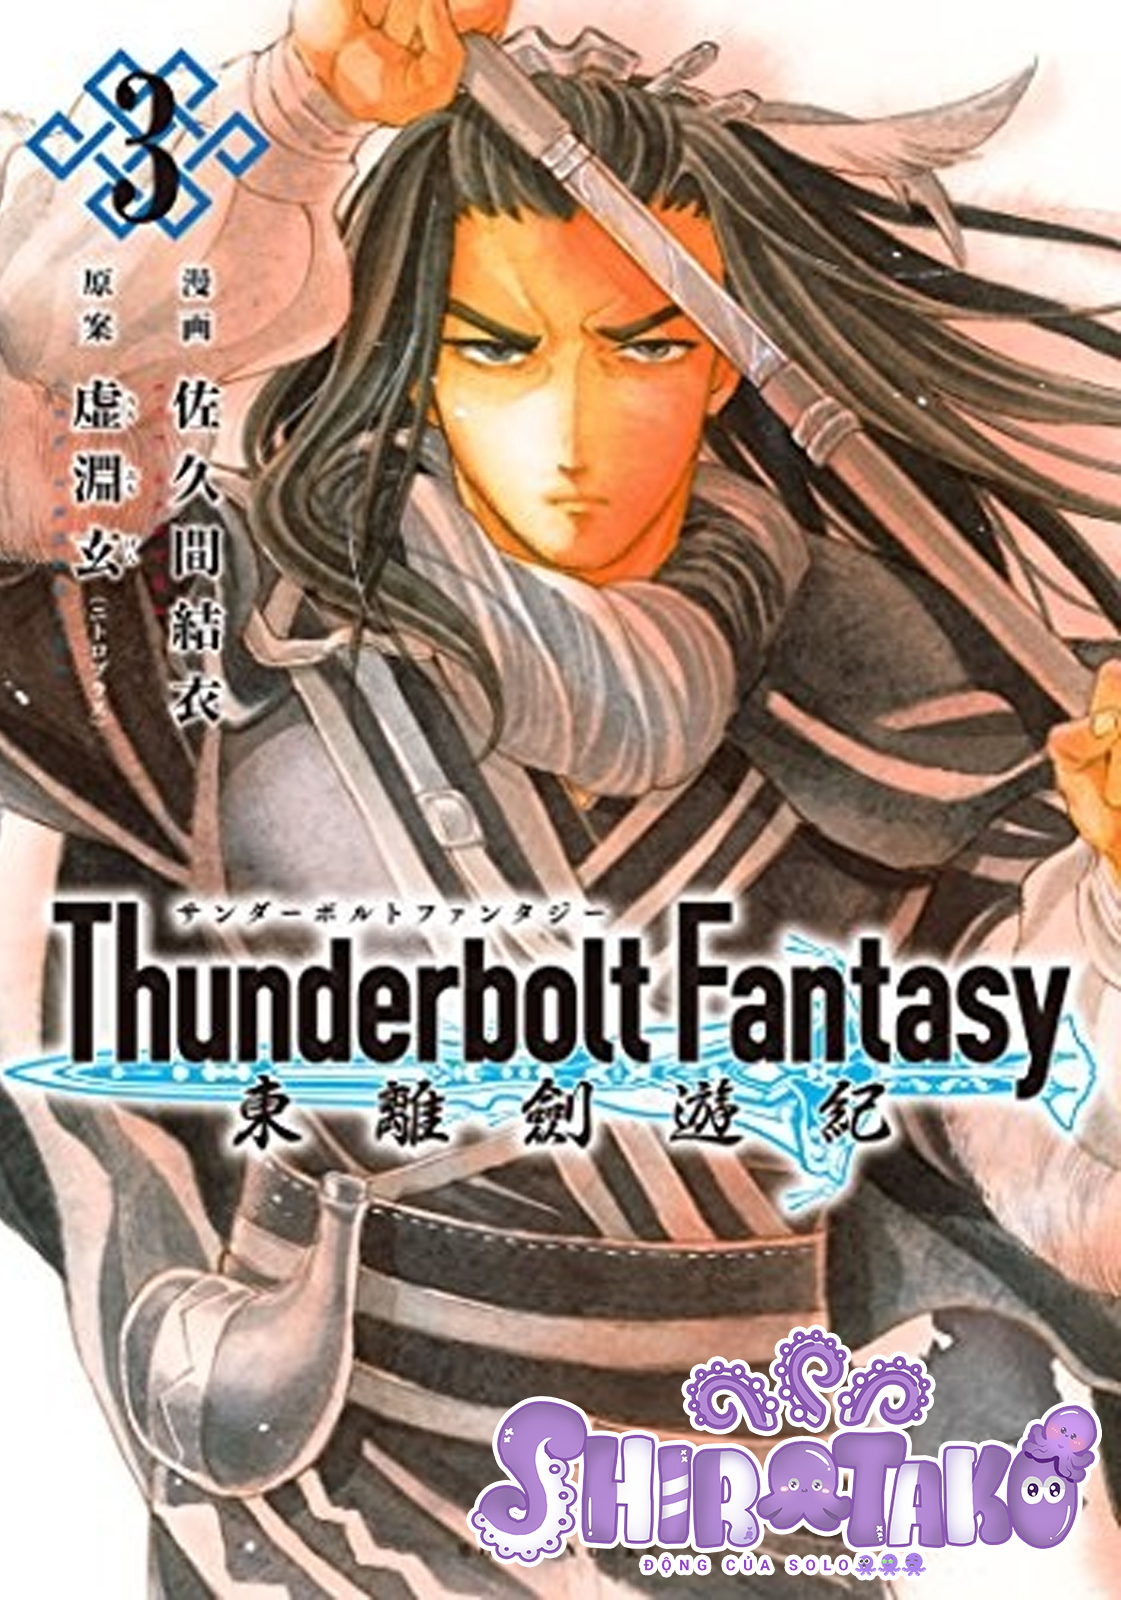 Thunderbolt Fantasy: Touriken Yuuki